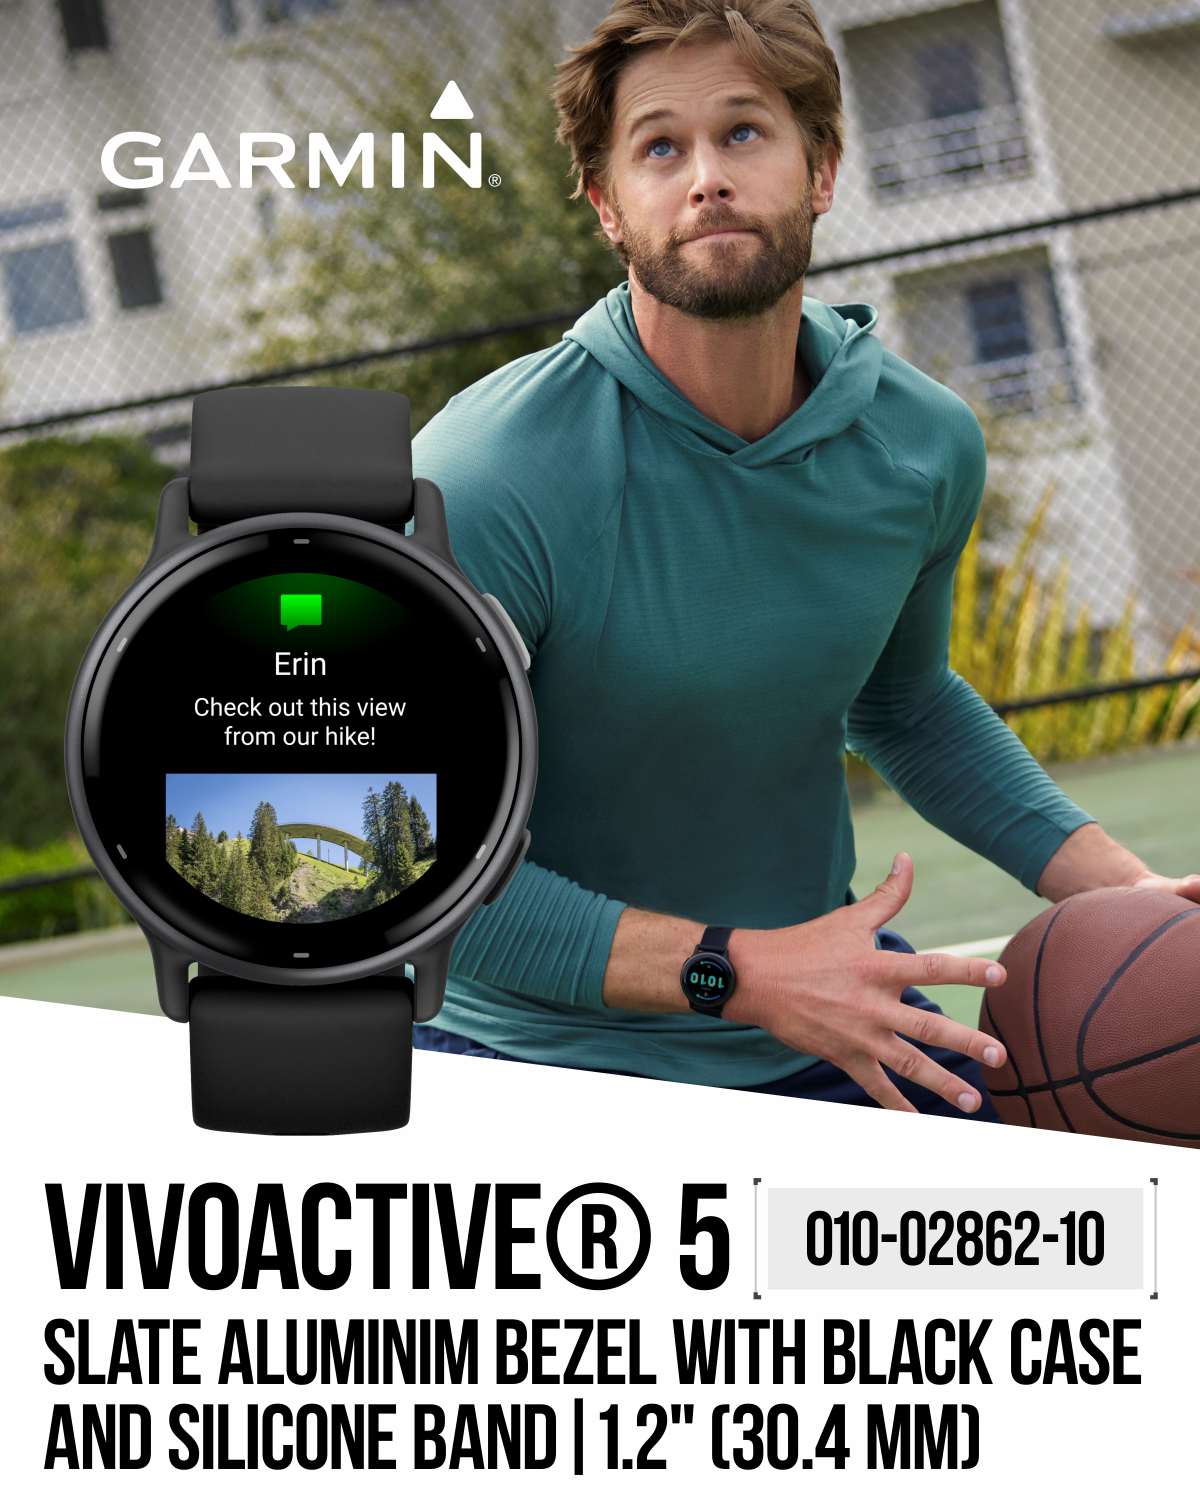 Garmin vivoactive 5, Slate Aluminum Bezel with Black Case and